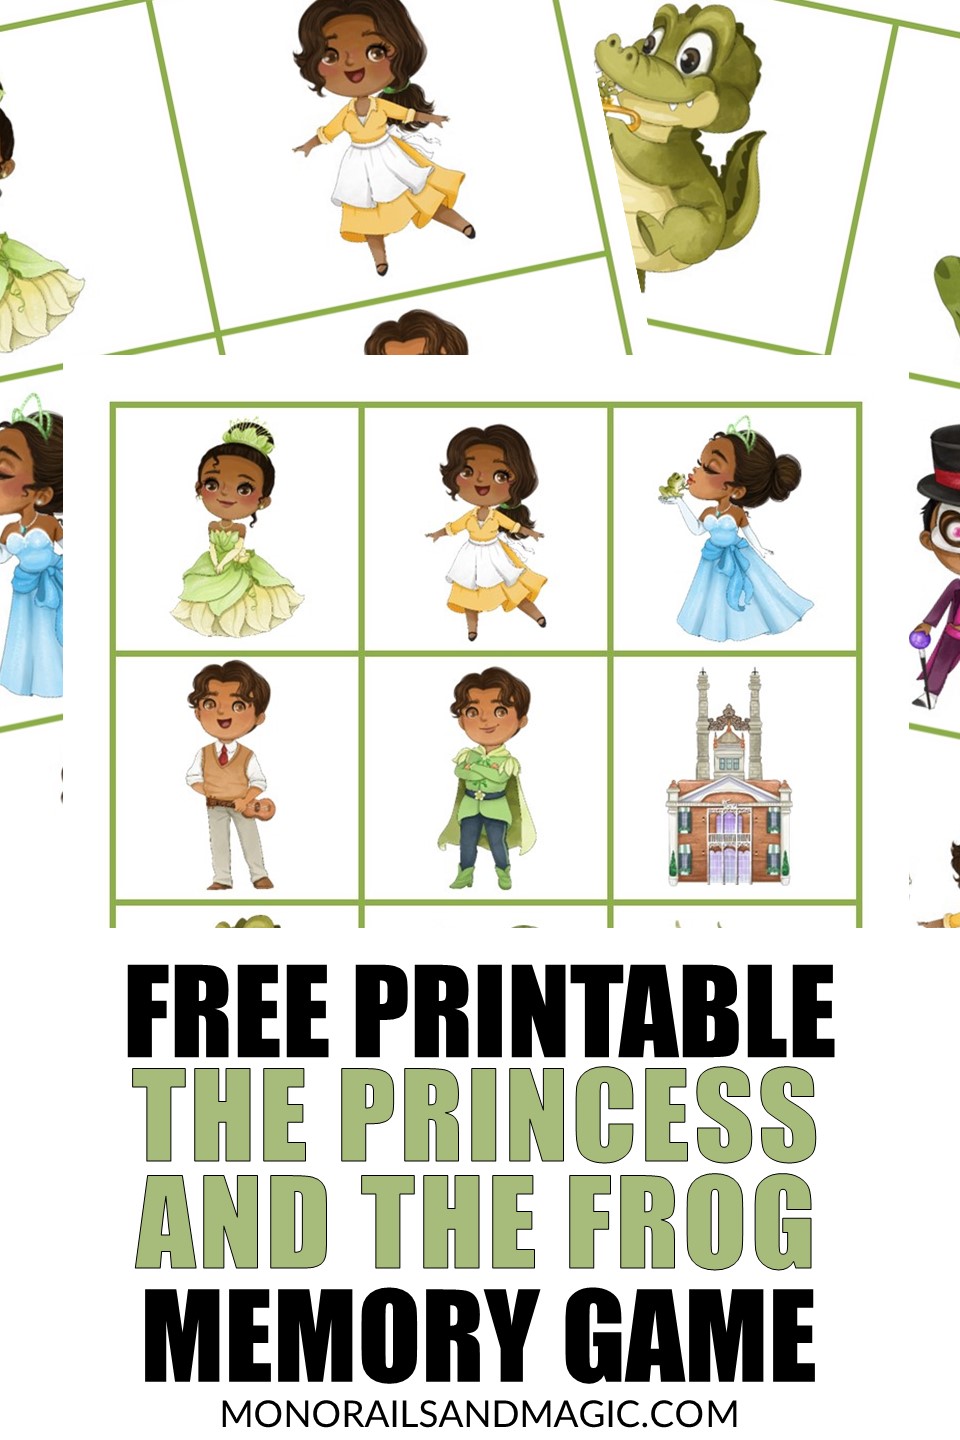 Free printable The Princess and the Frog memory game for kids.